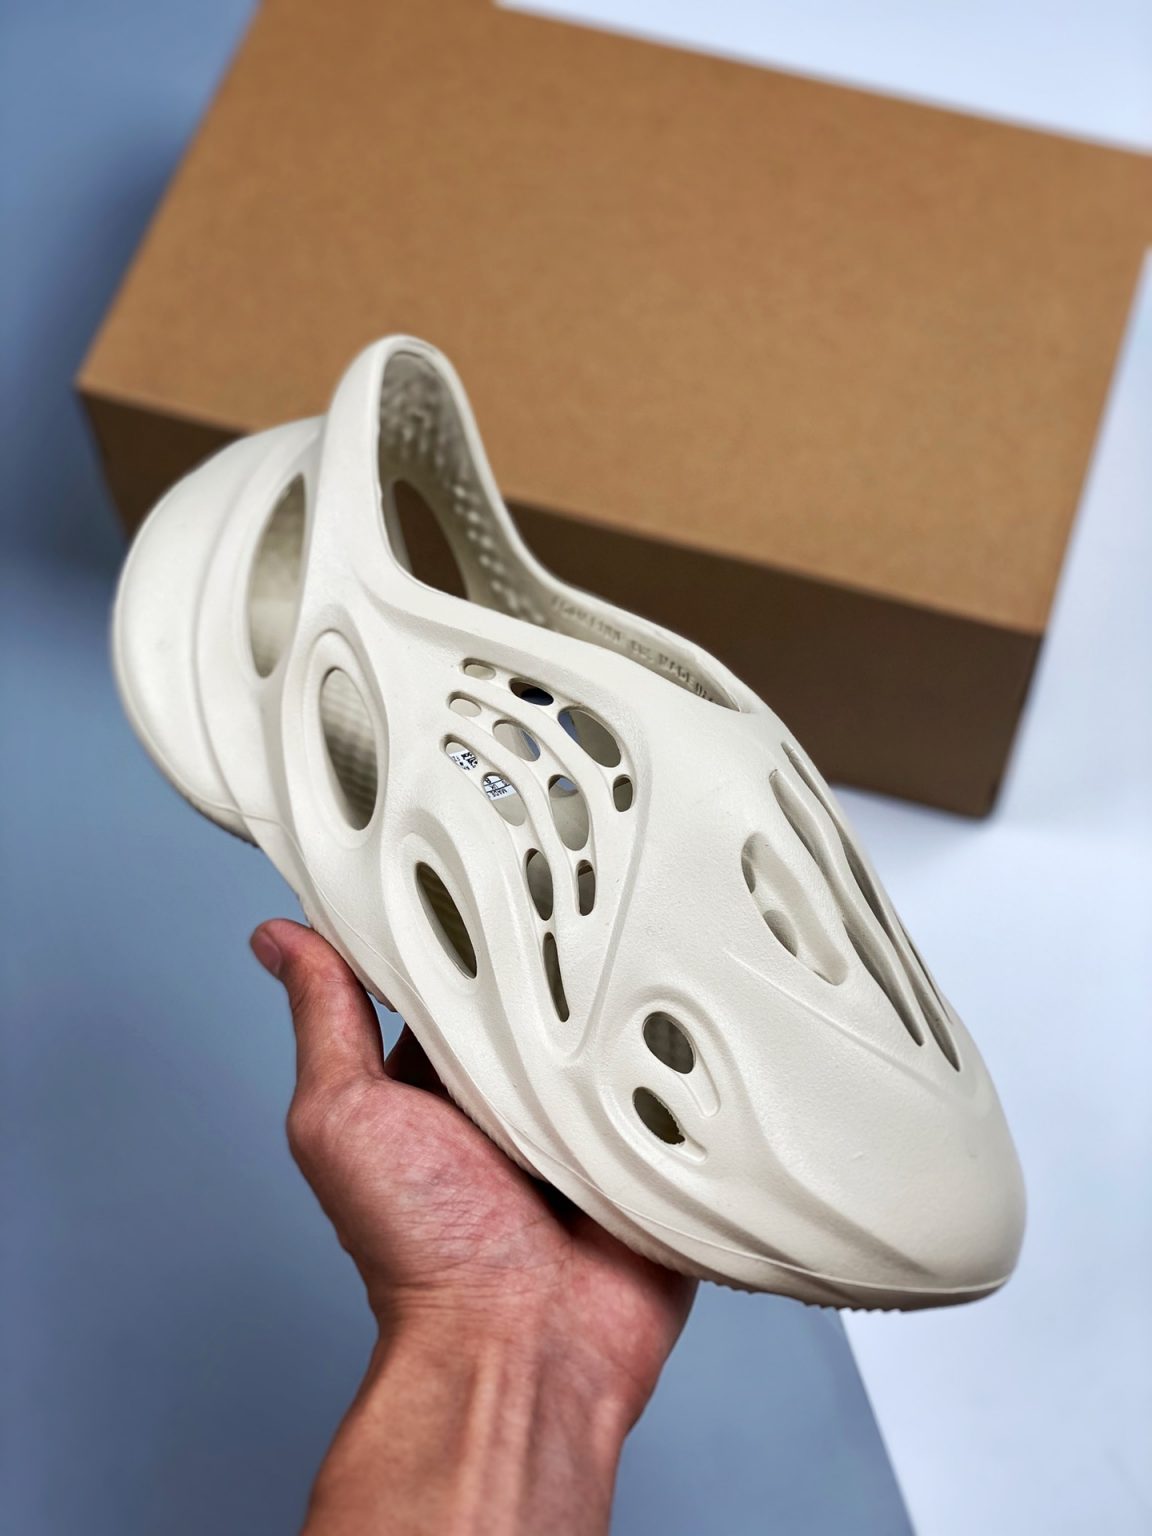 adidas Yeezy Foam Runner “Sand” FY4567 For Sale – Sneaker Hello